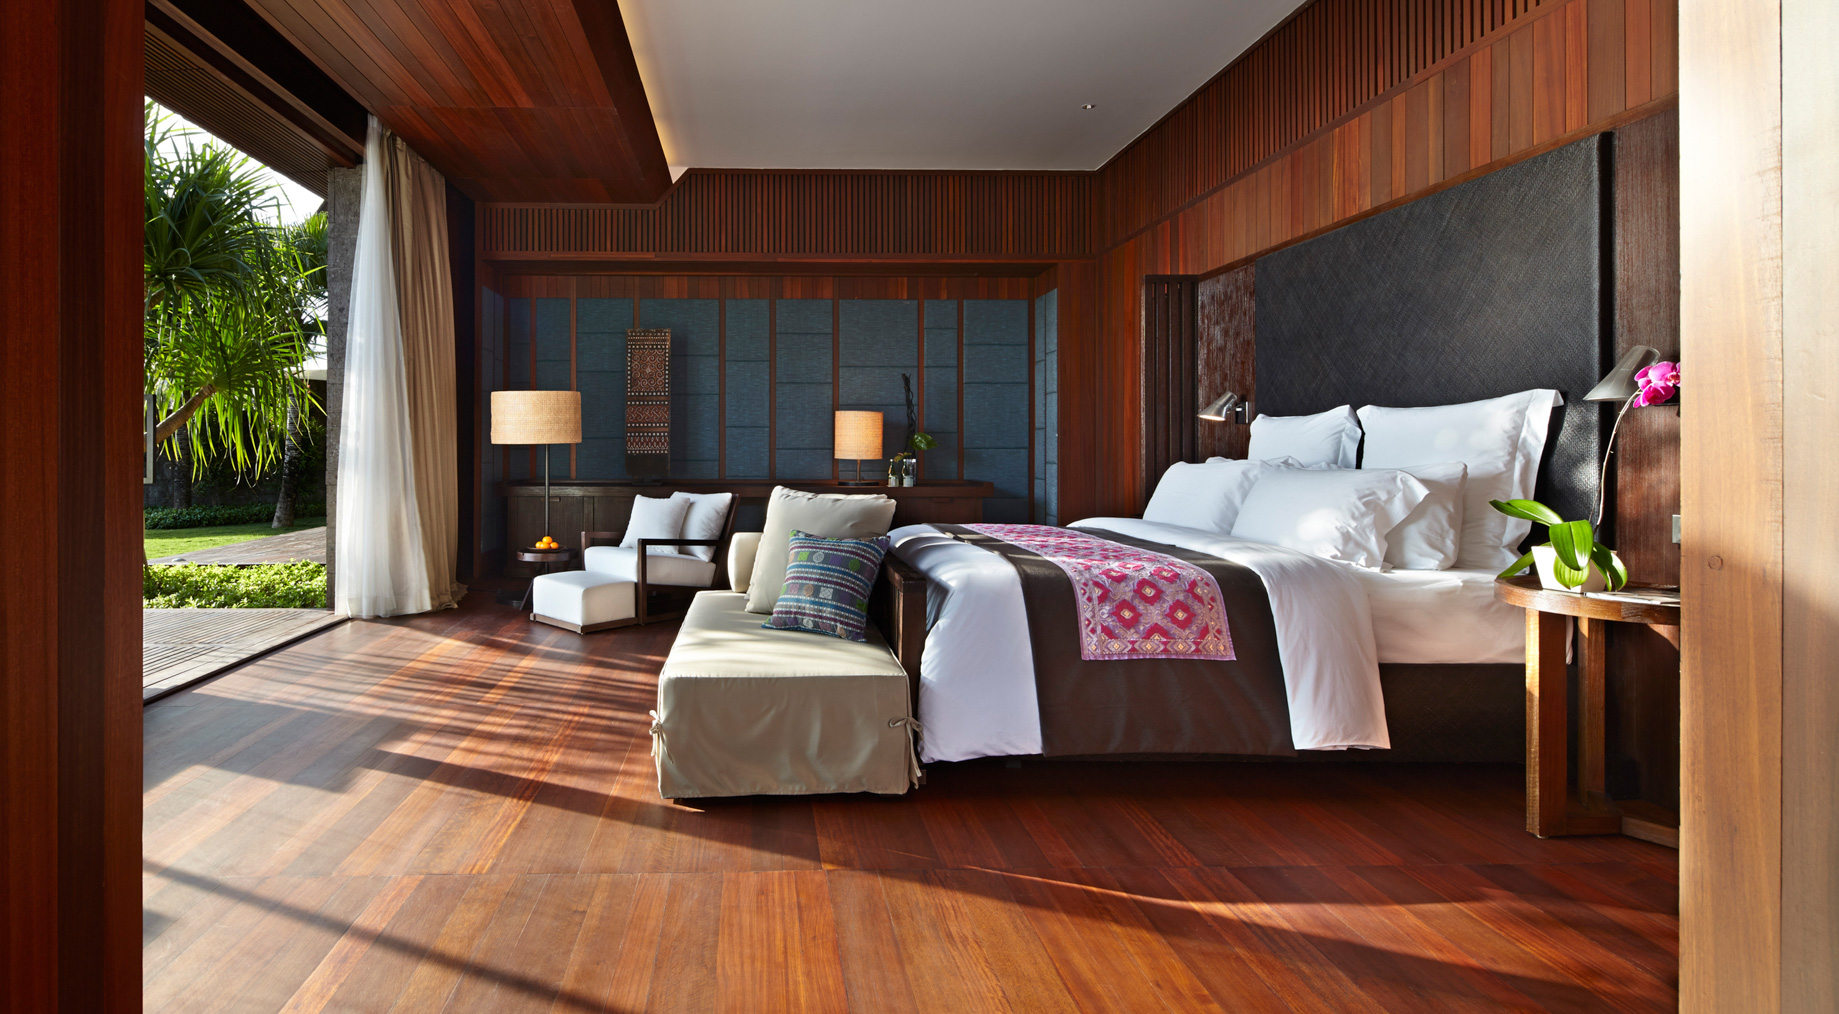 Bvlgari Resort Bali - Uluwatu, Bali, Indonesia - The Mansions Bedroom